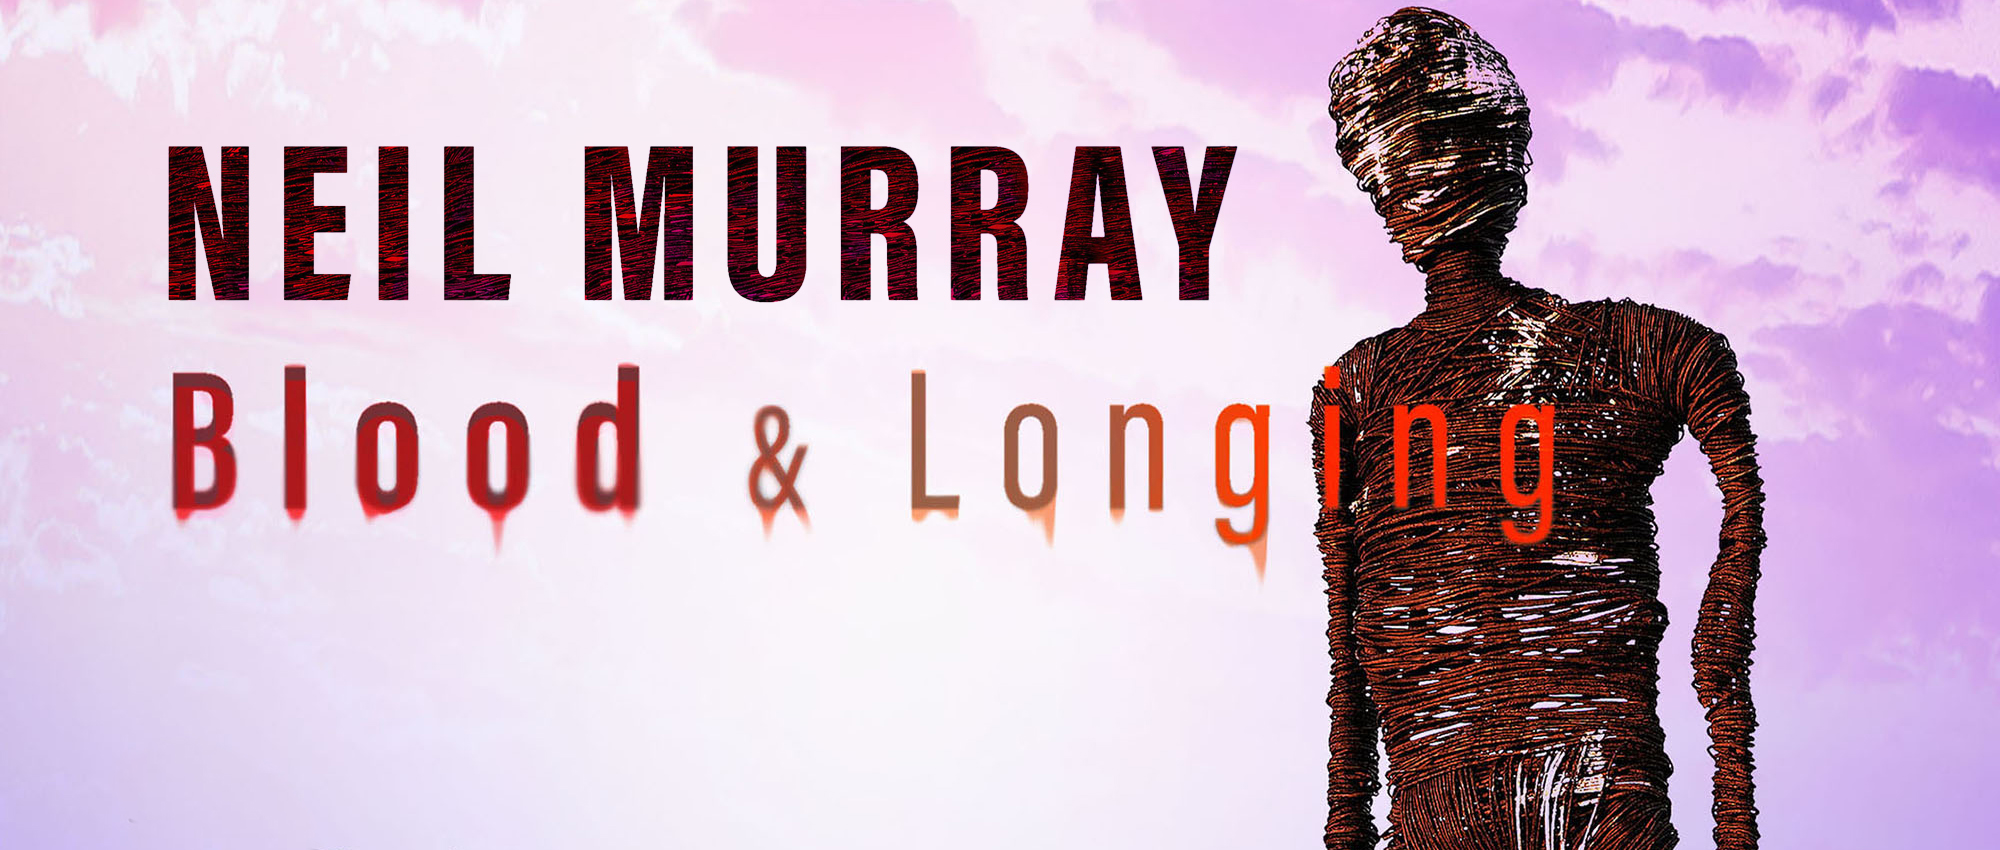 Neil Murray - Blood & Longing